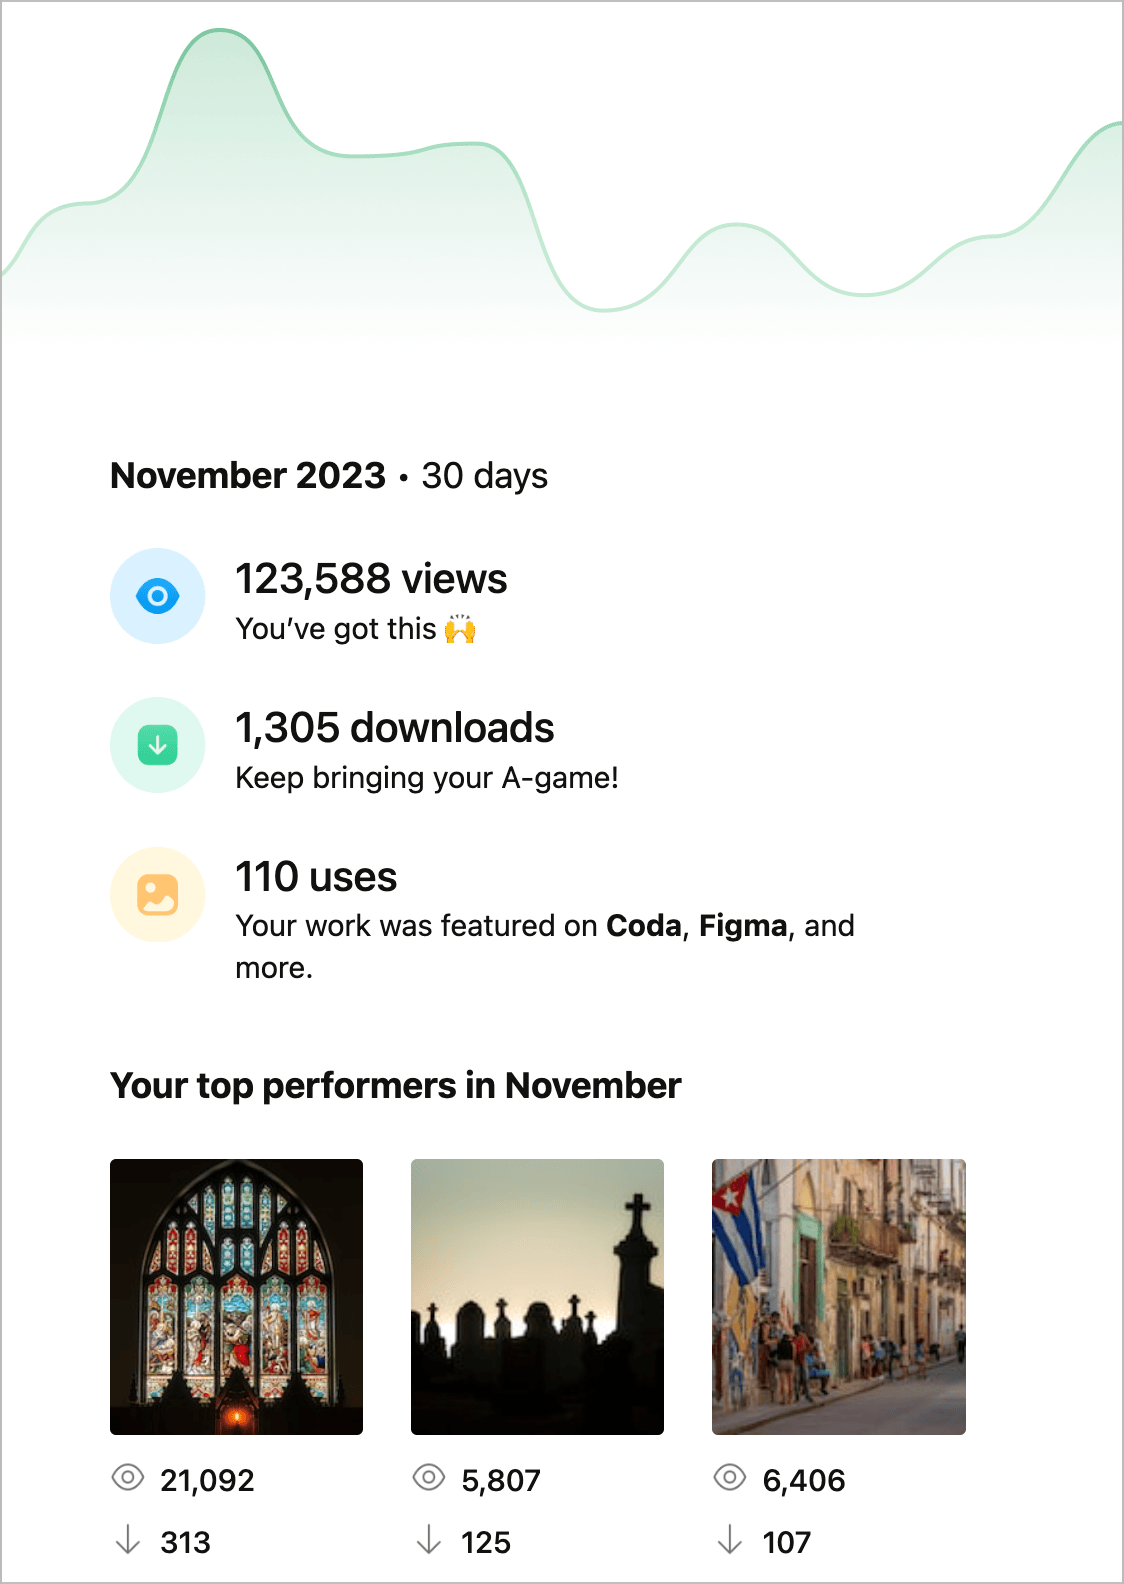 My Unsplash download statistics for the month of November.